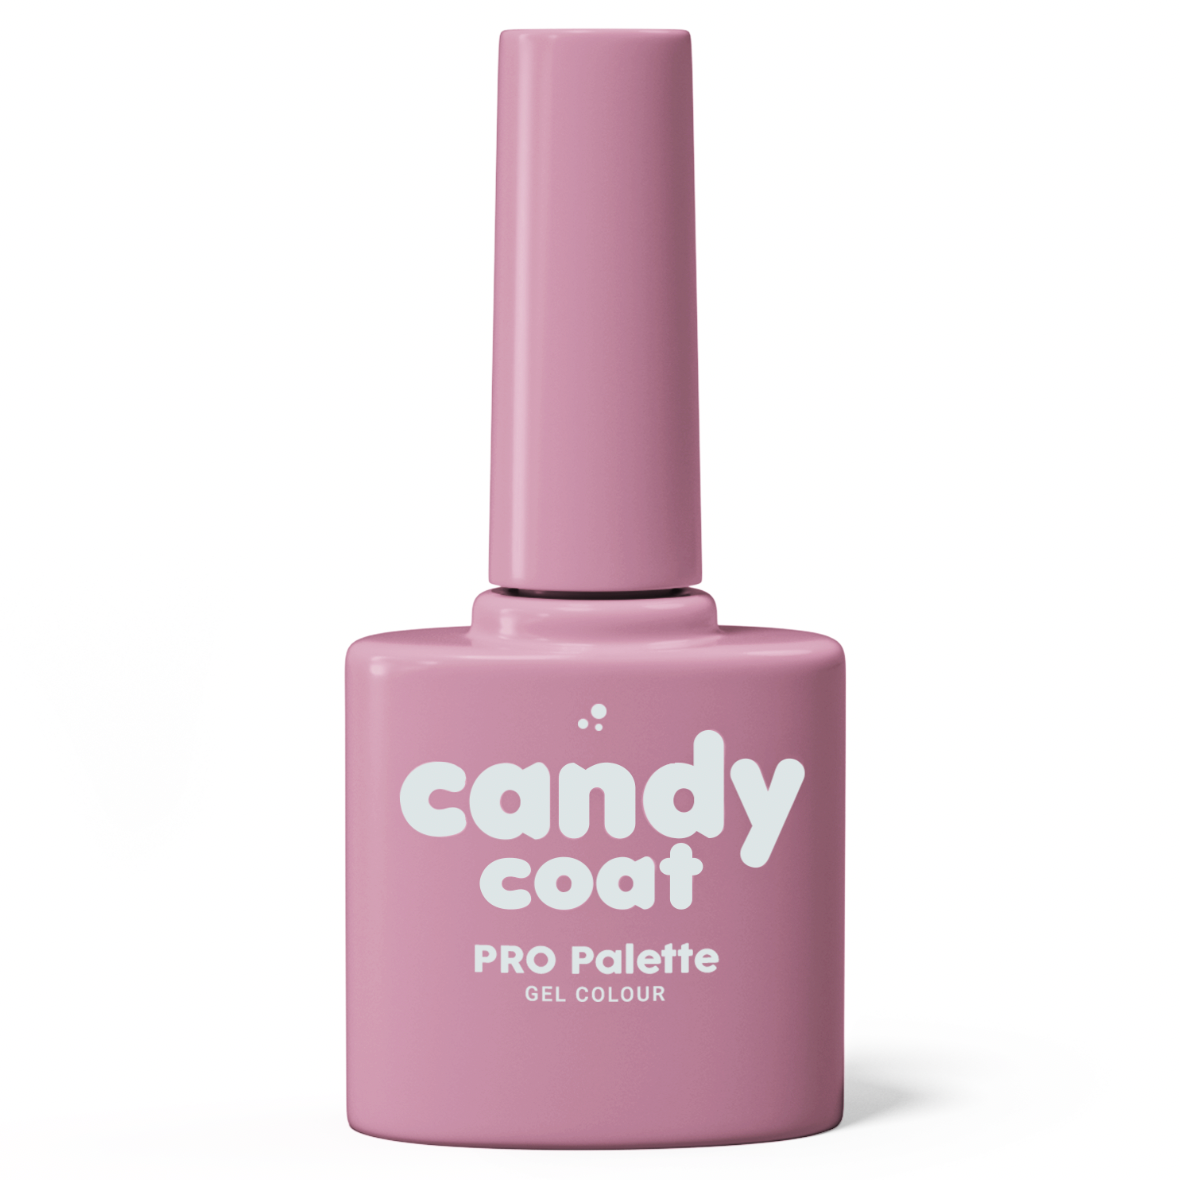 Candy Coat PRO Palette - Rosa - Nº 021 - Candy Coat